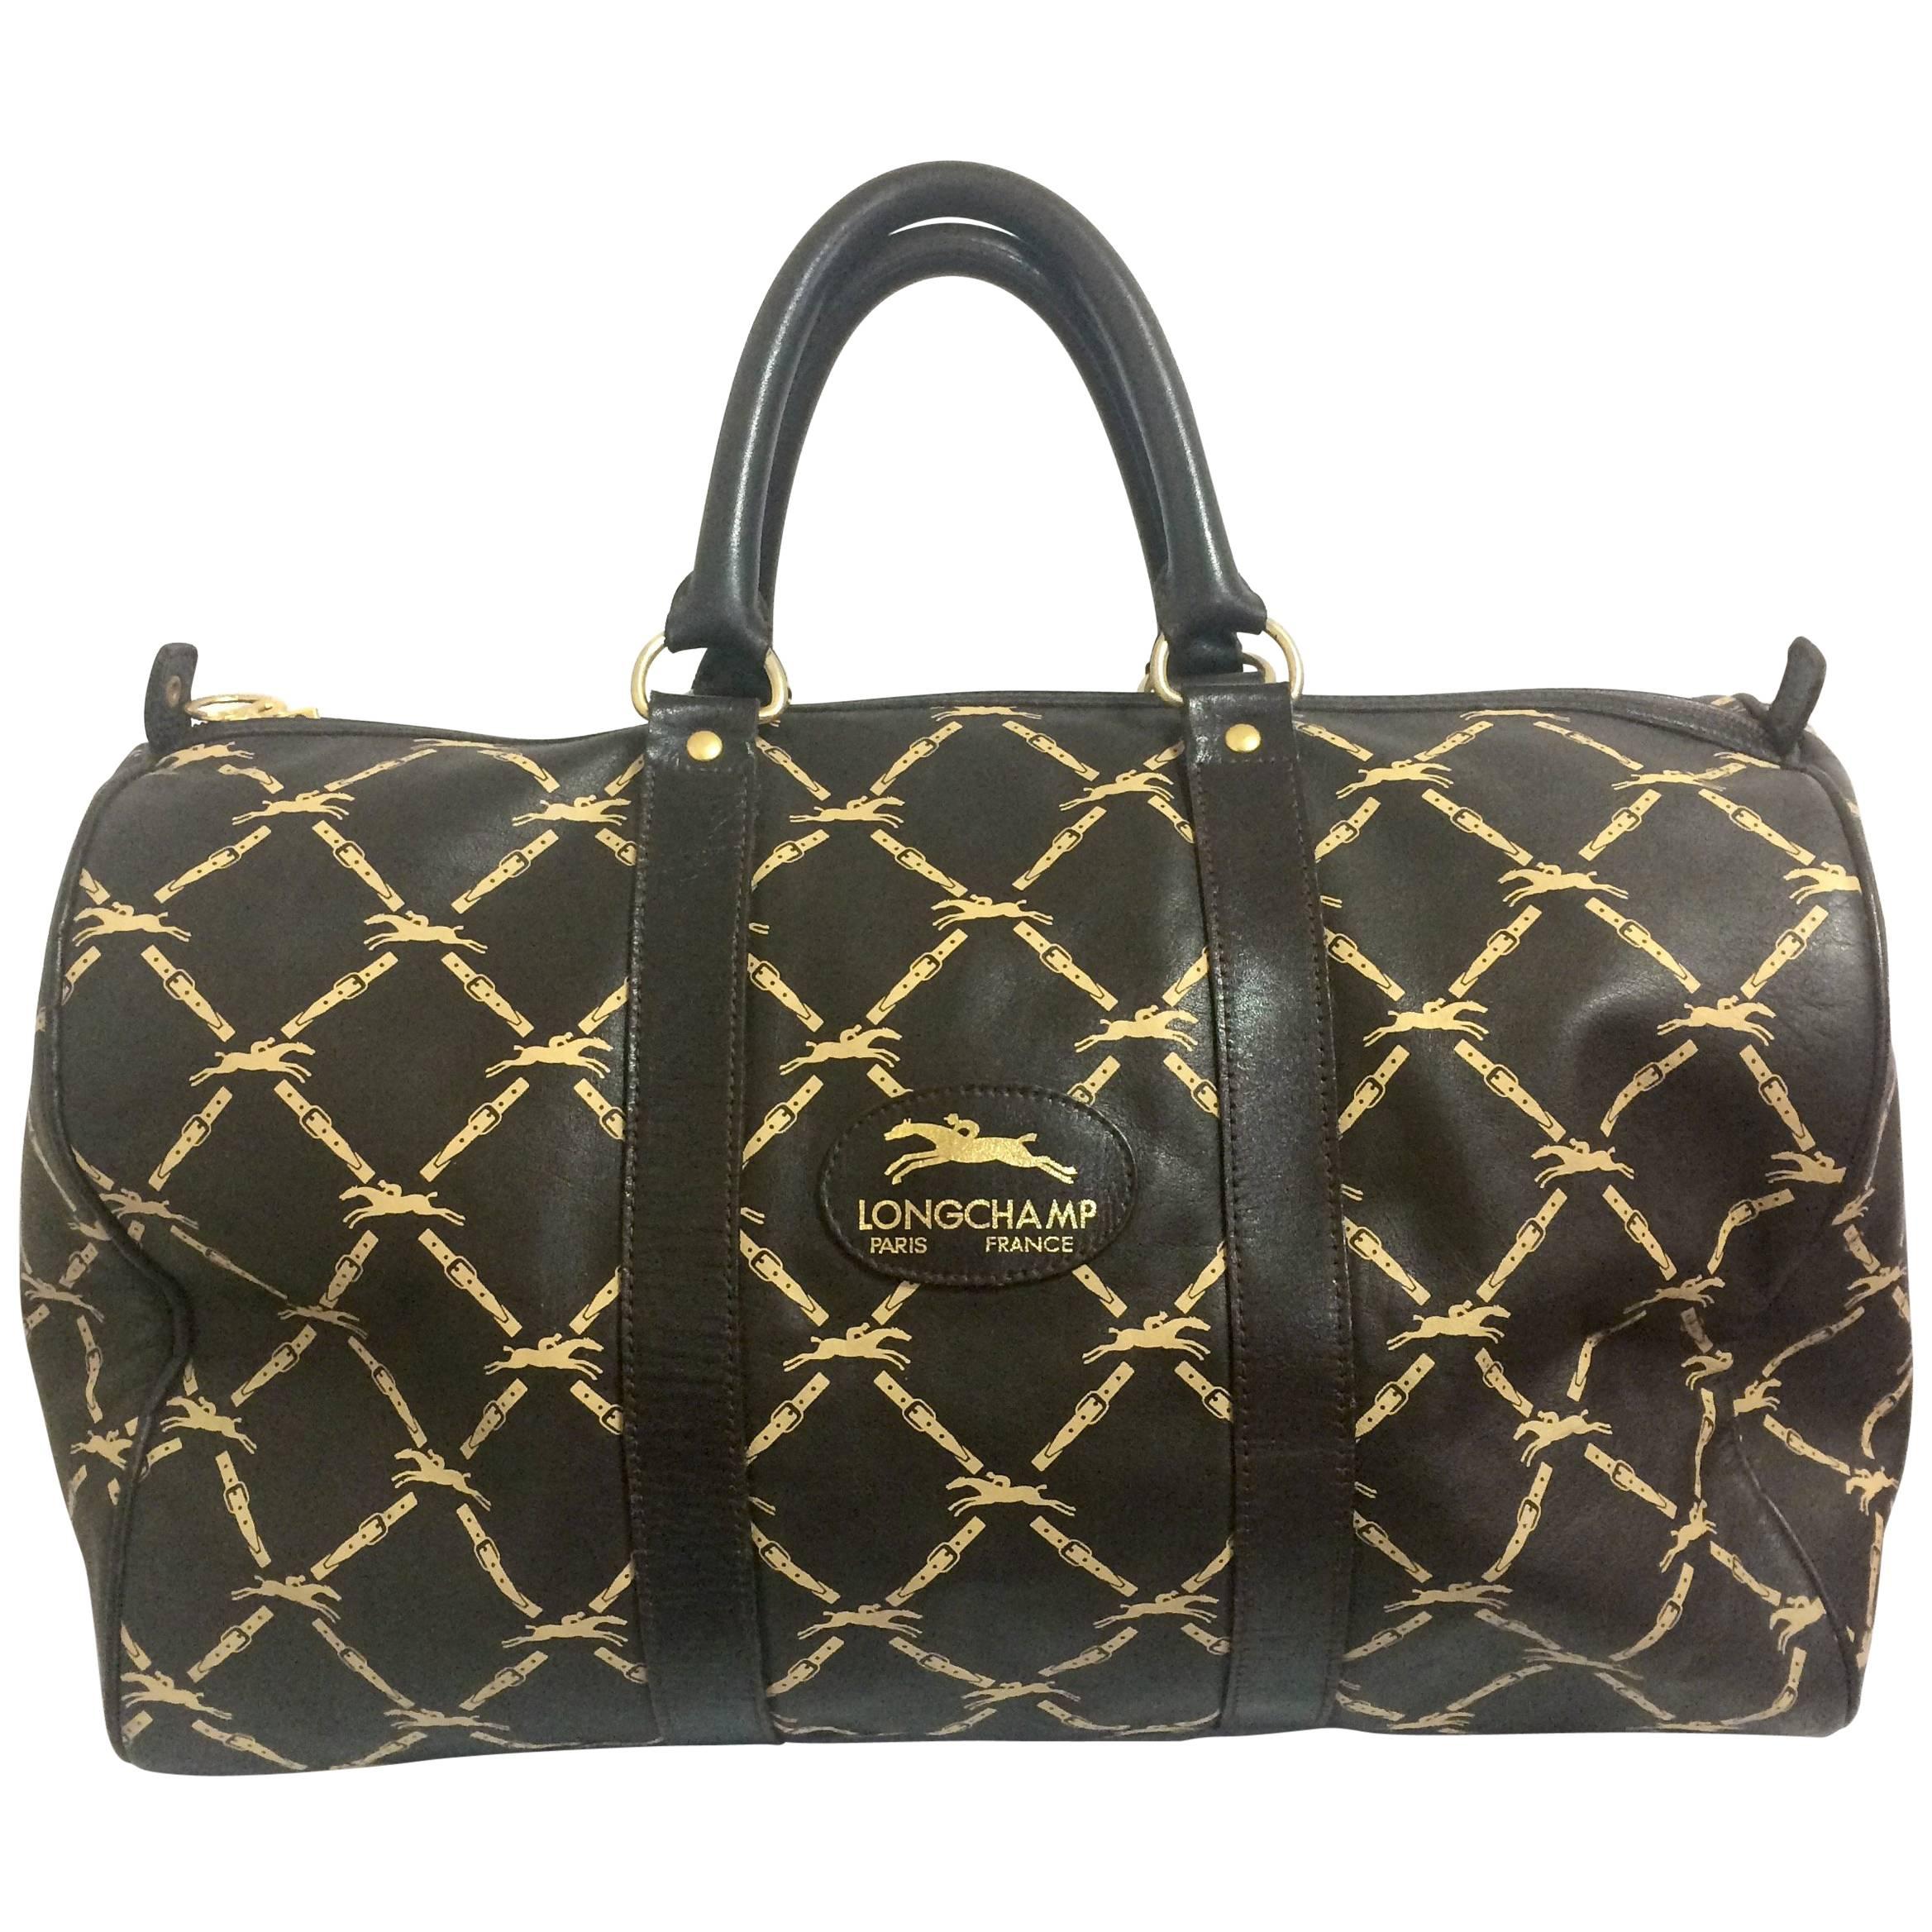 Vintage Longchamp classic dark brown nappa leather duffle bag, travel bag. 